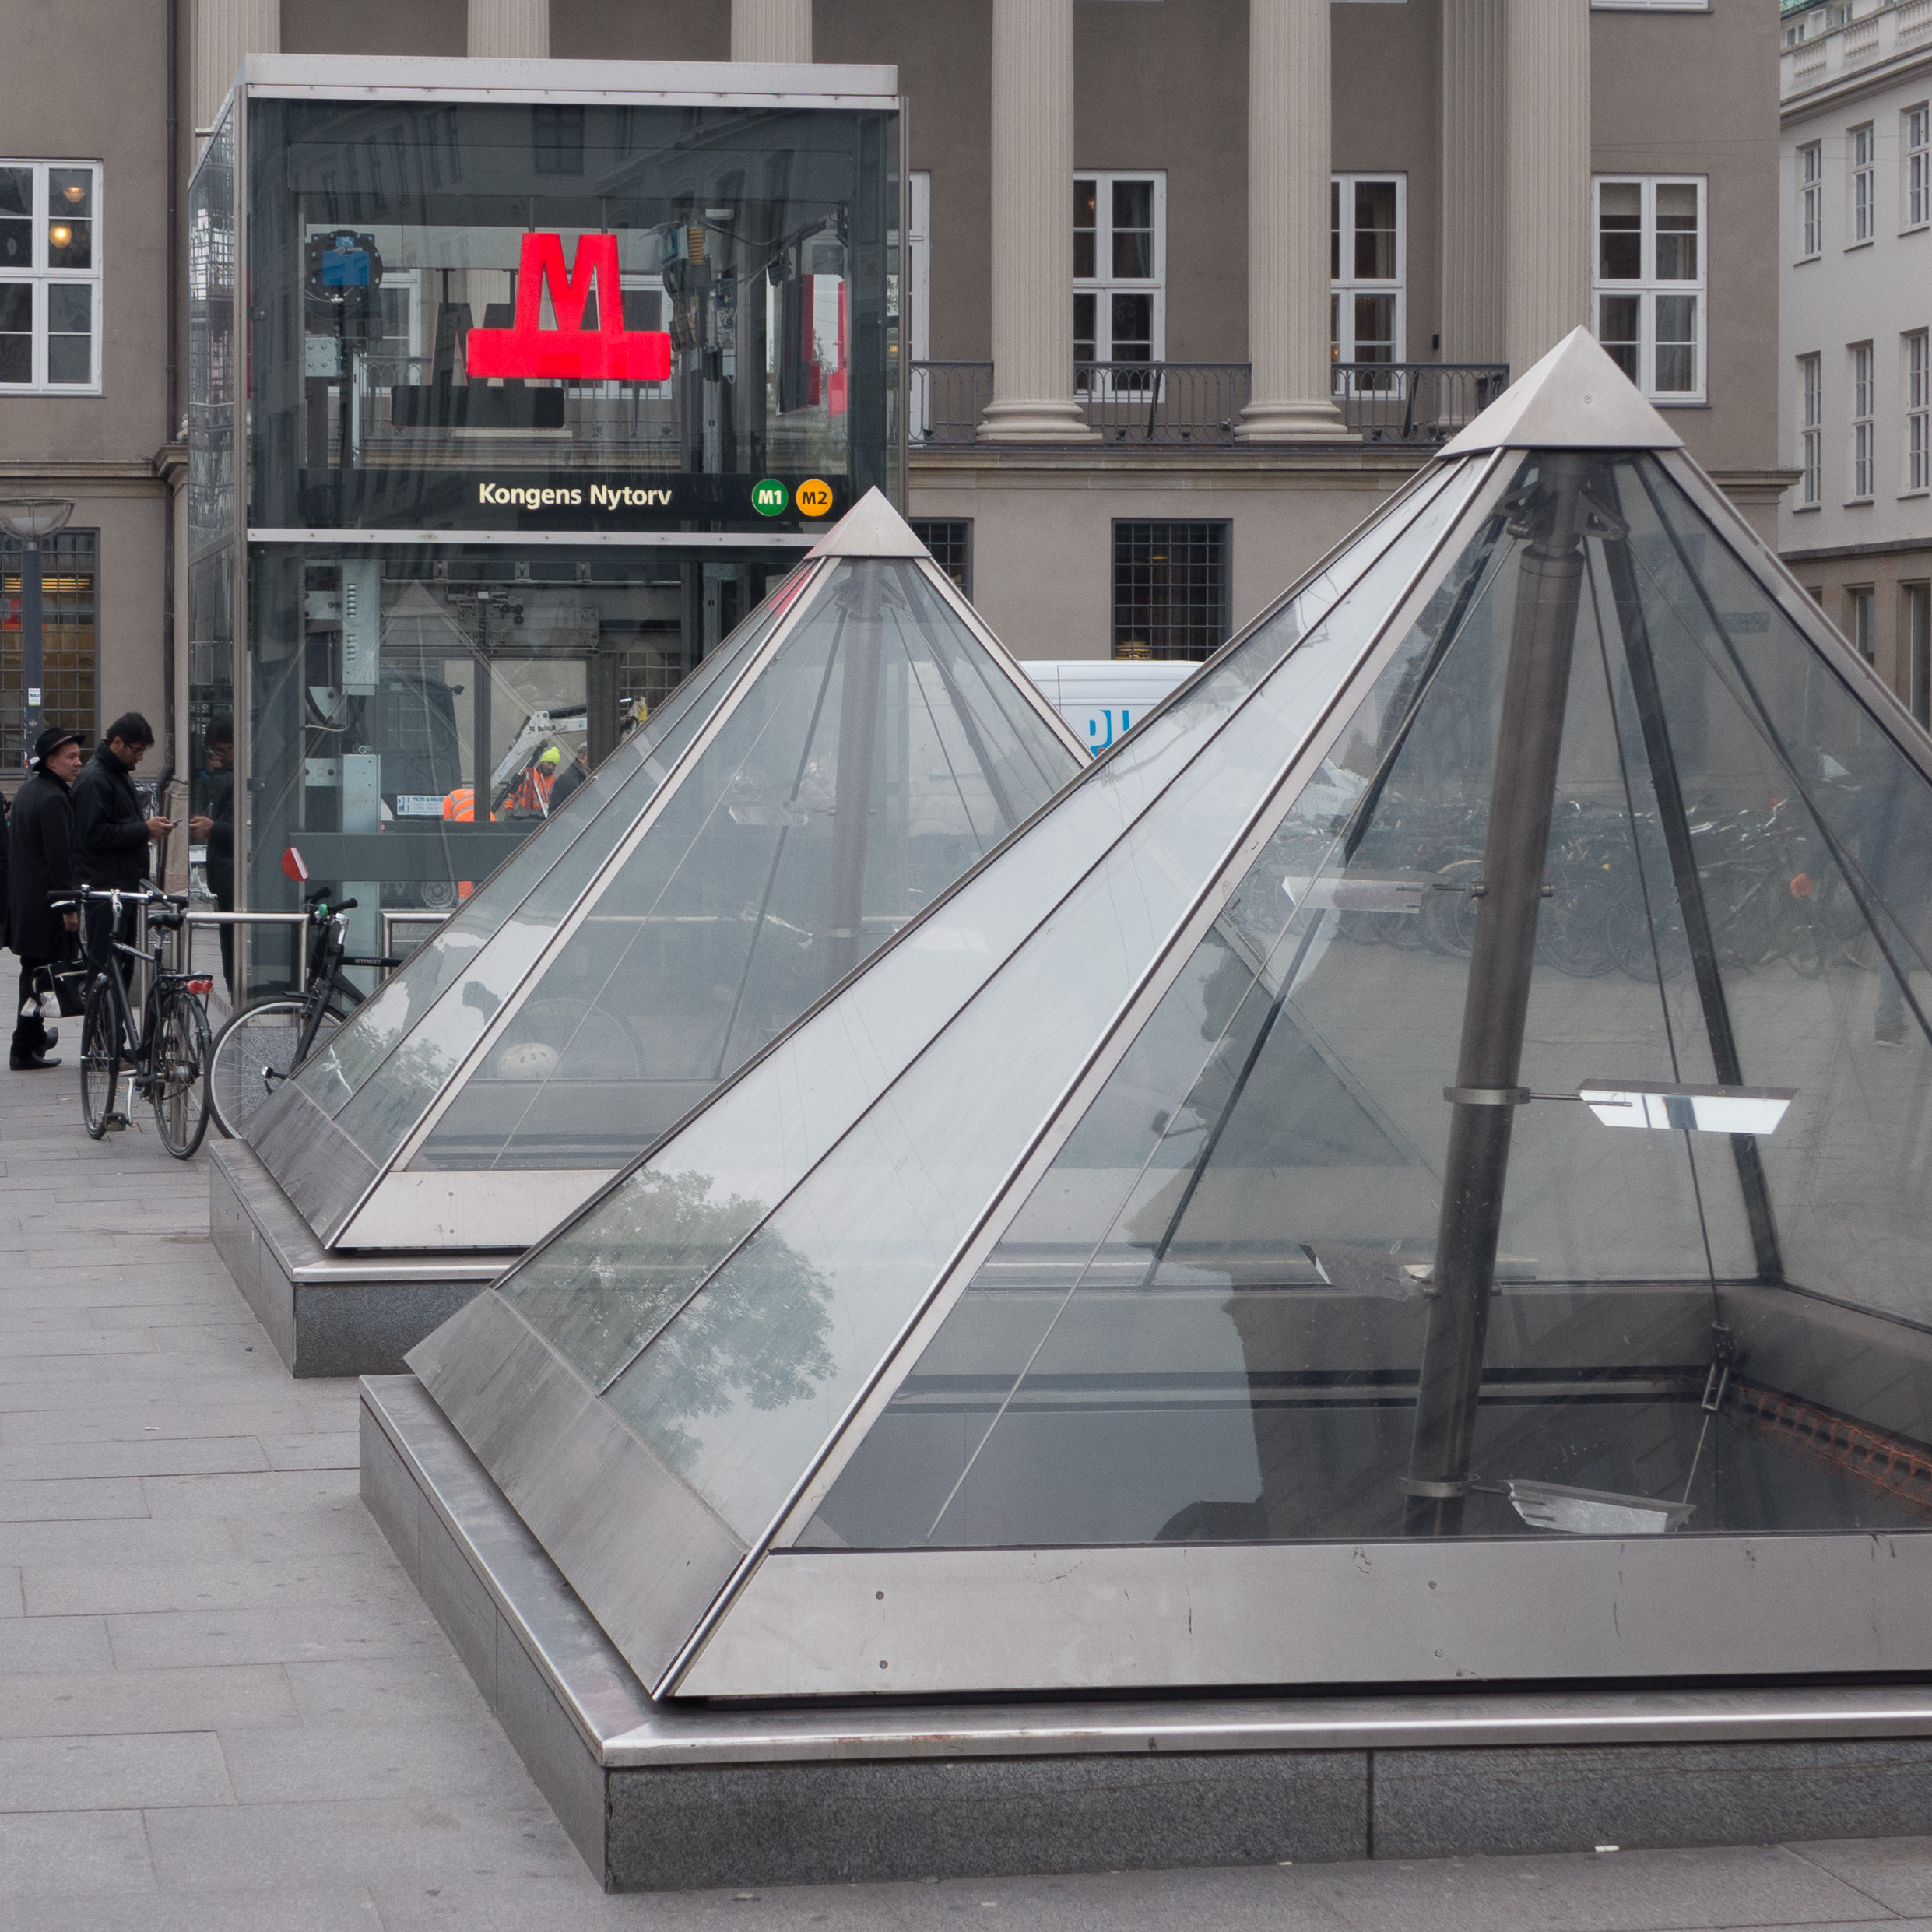 Copenhagen Metro — danish architecture and design review